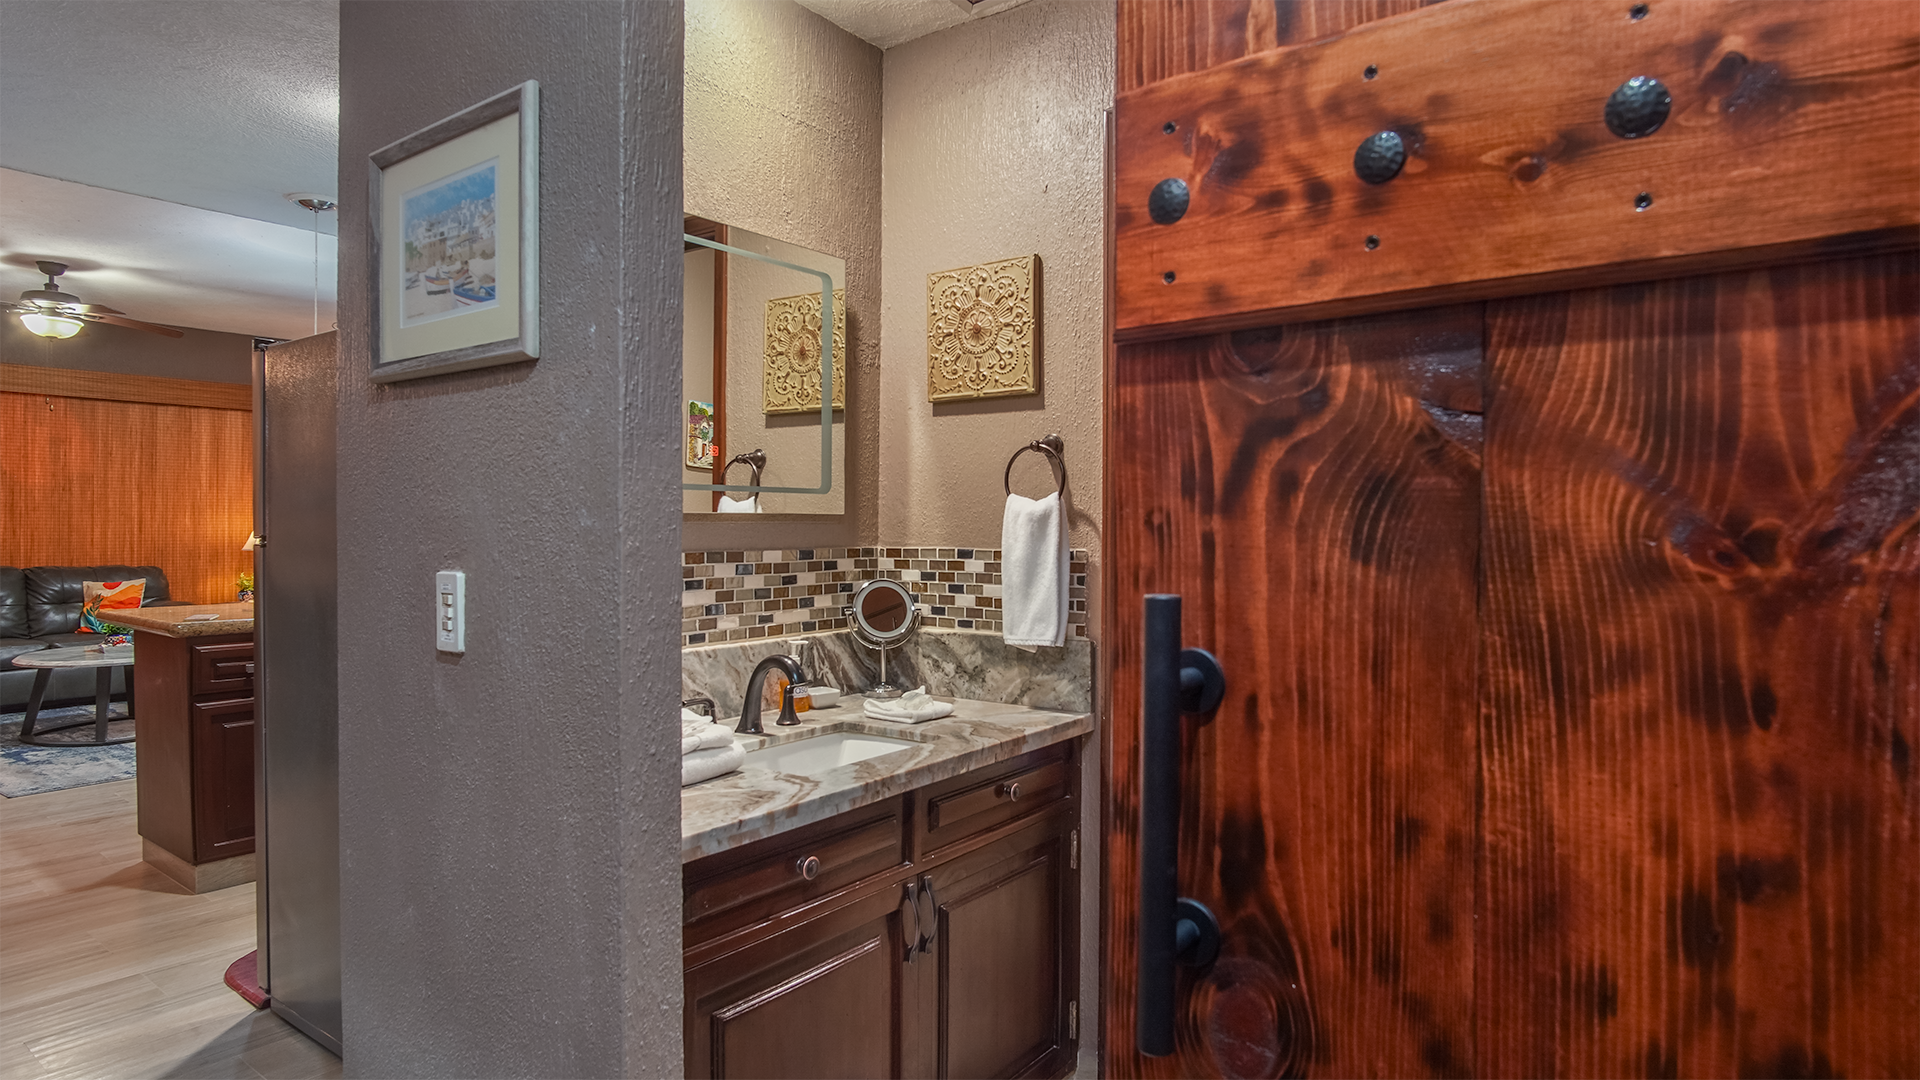 Custom wooden sliding barndoor as you access the bathroom vanity area.